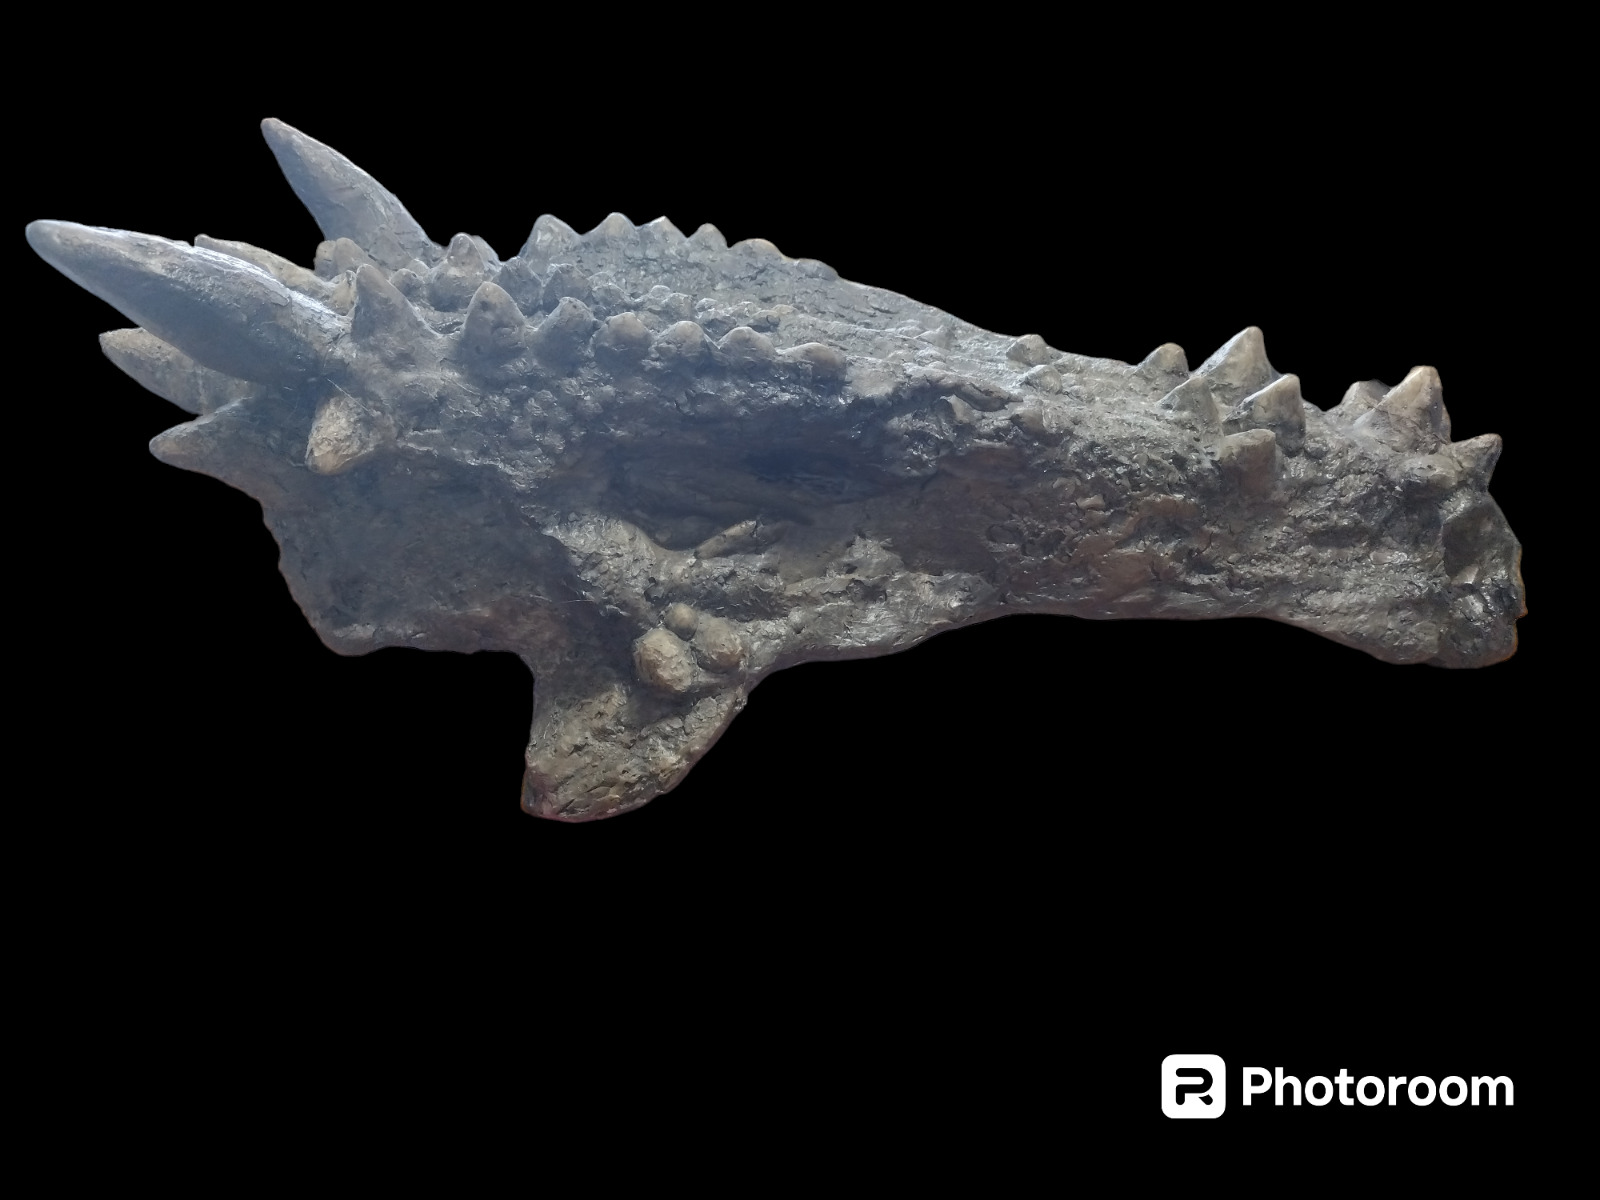 Dracorex hogwartsia skull fossil cast replica-dinosaurs-paleontology- life size